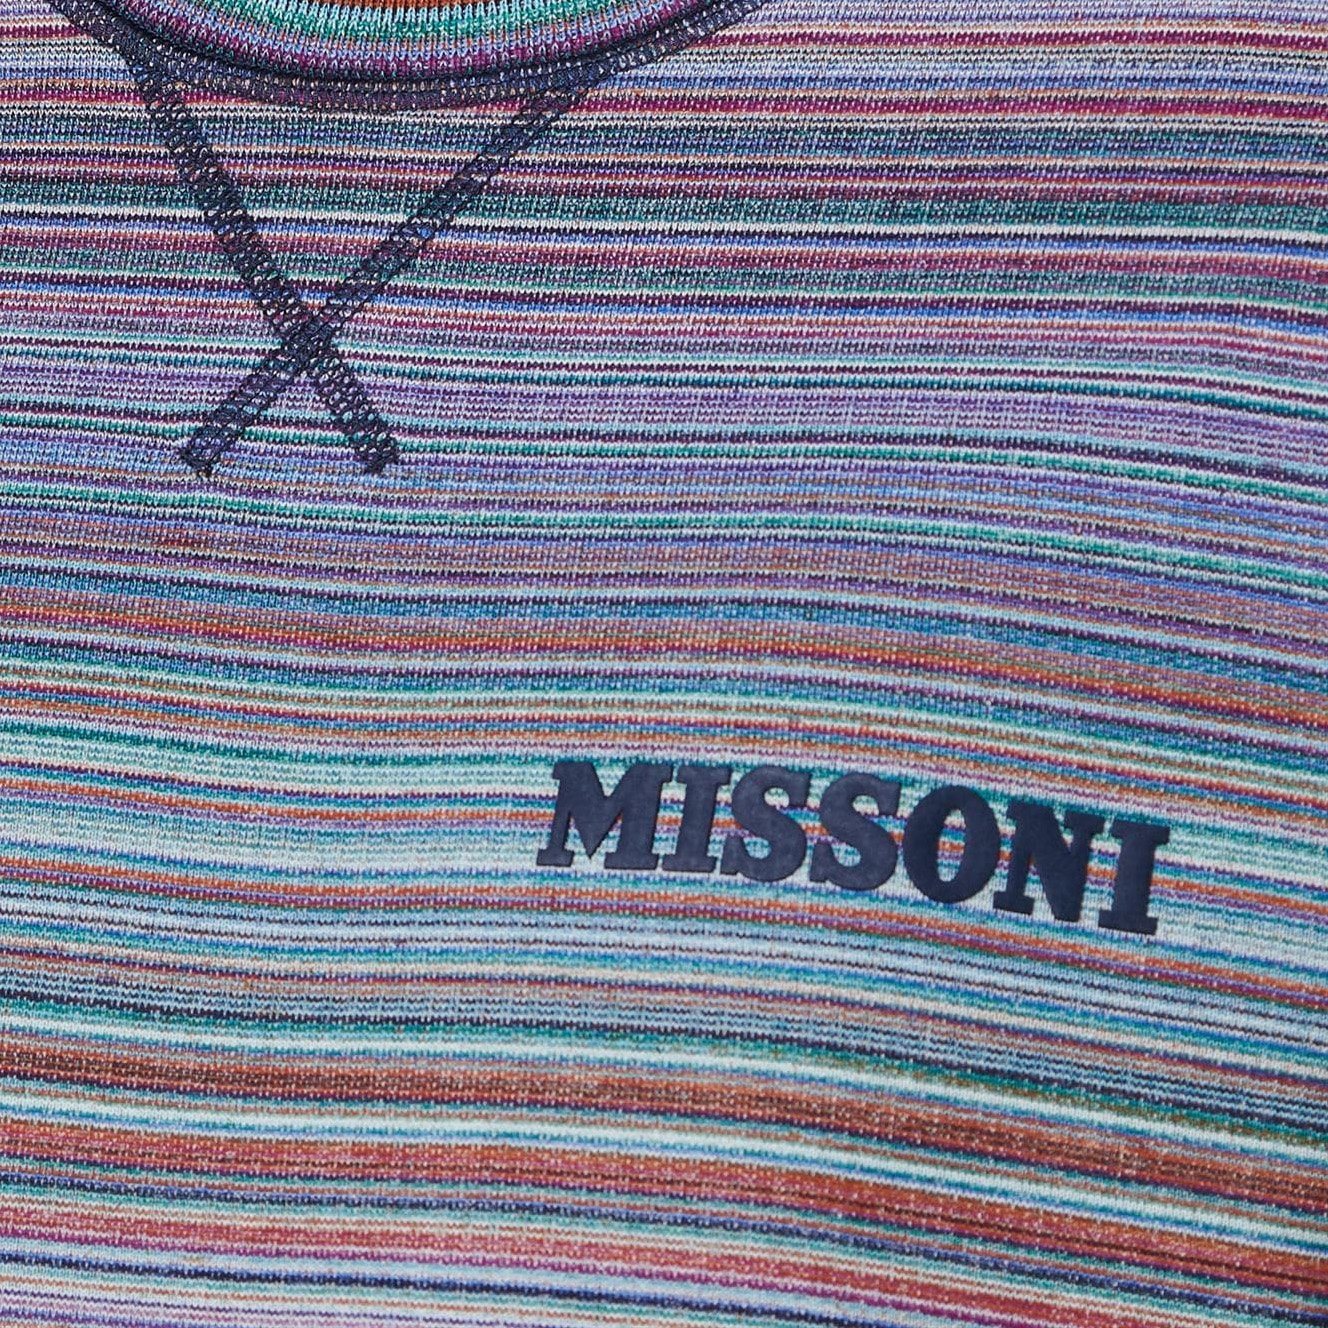 Missoni Multi Stripe Logo Sweatshirt Sweatshirt Missoni 